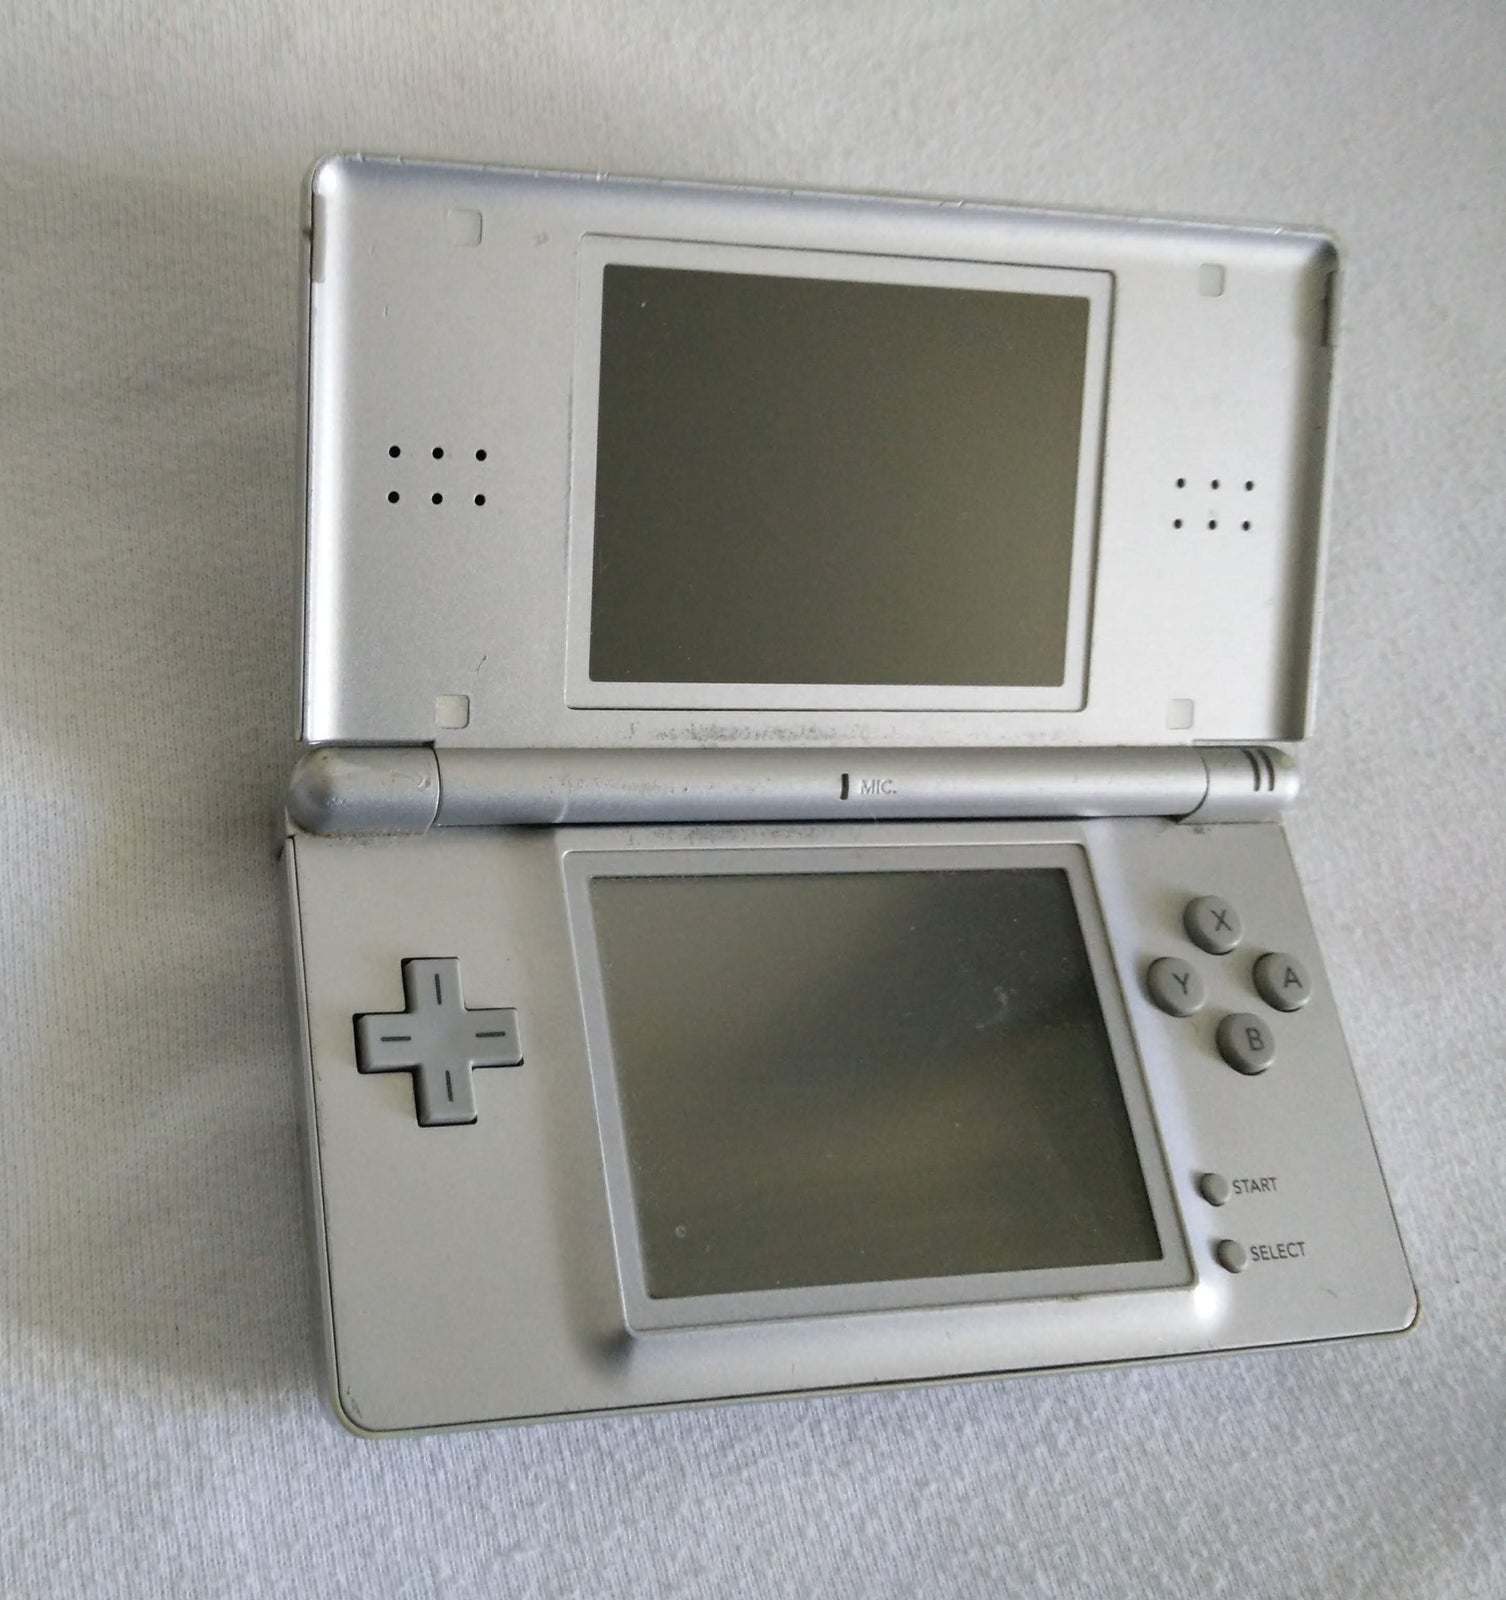 Nintendo DS Lite, Nintendo DS